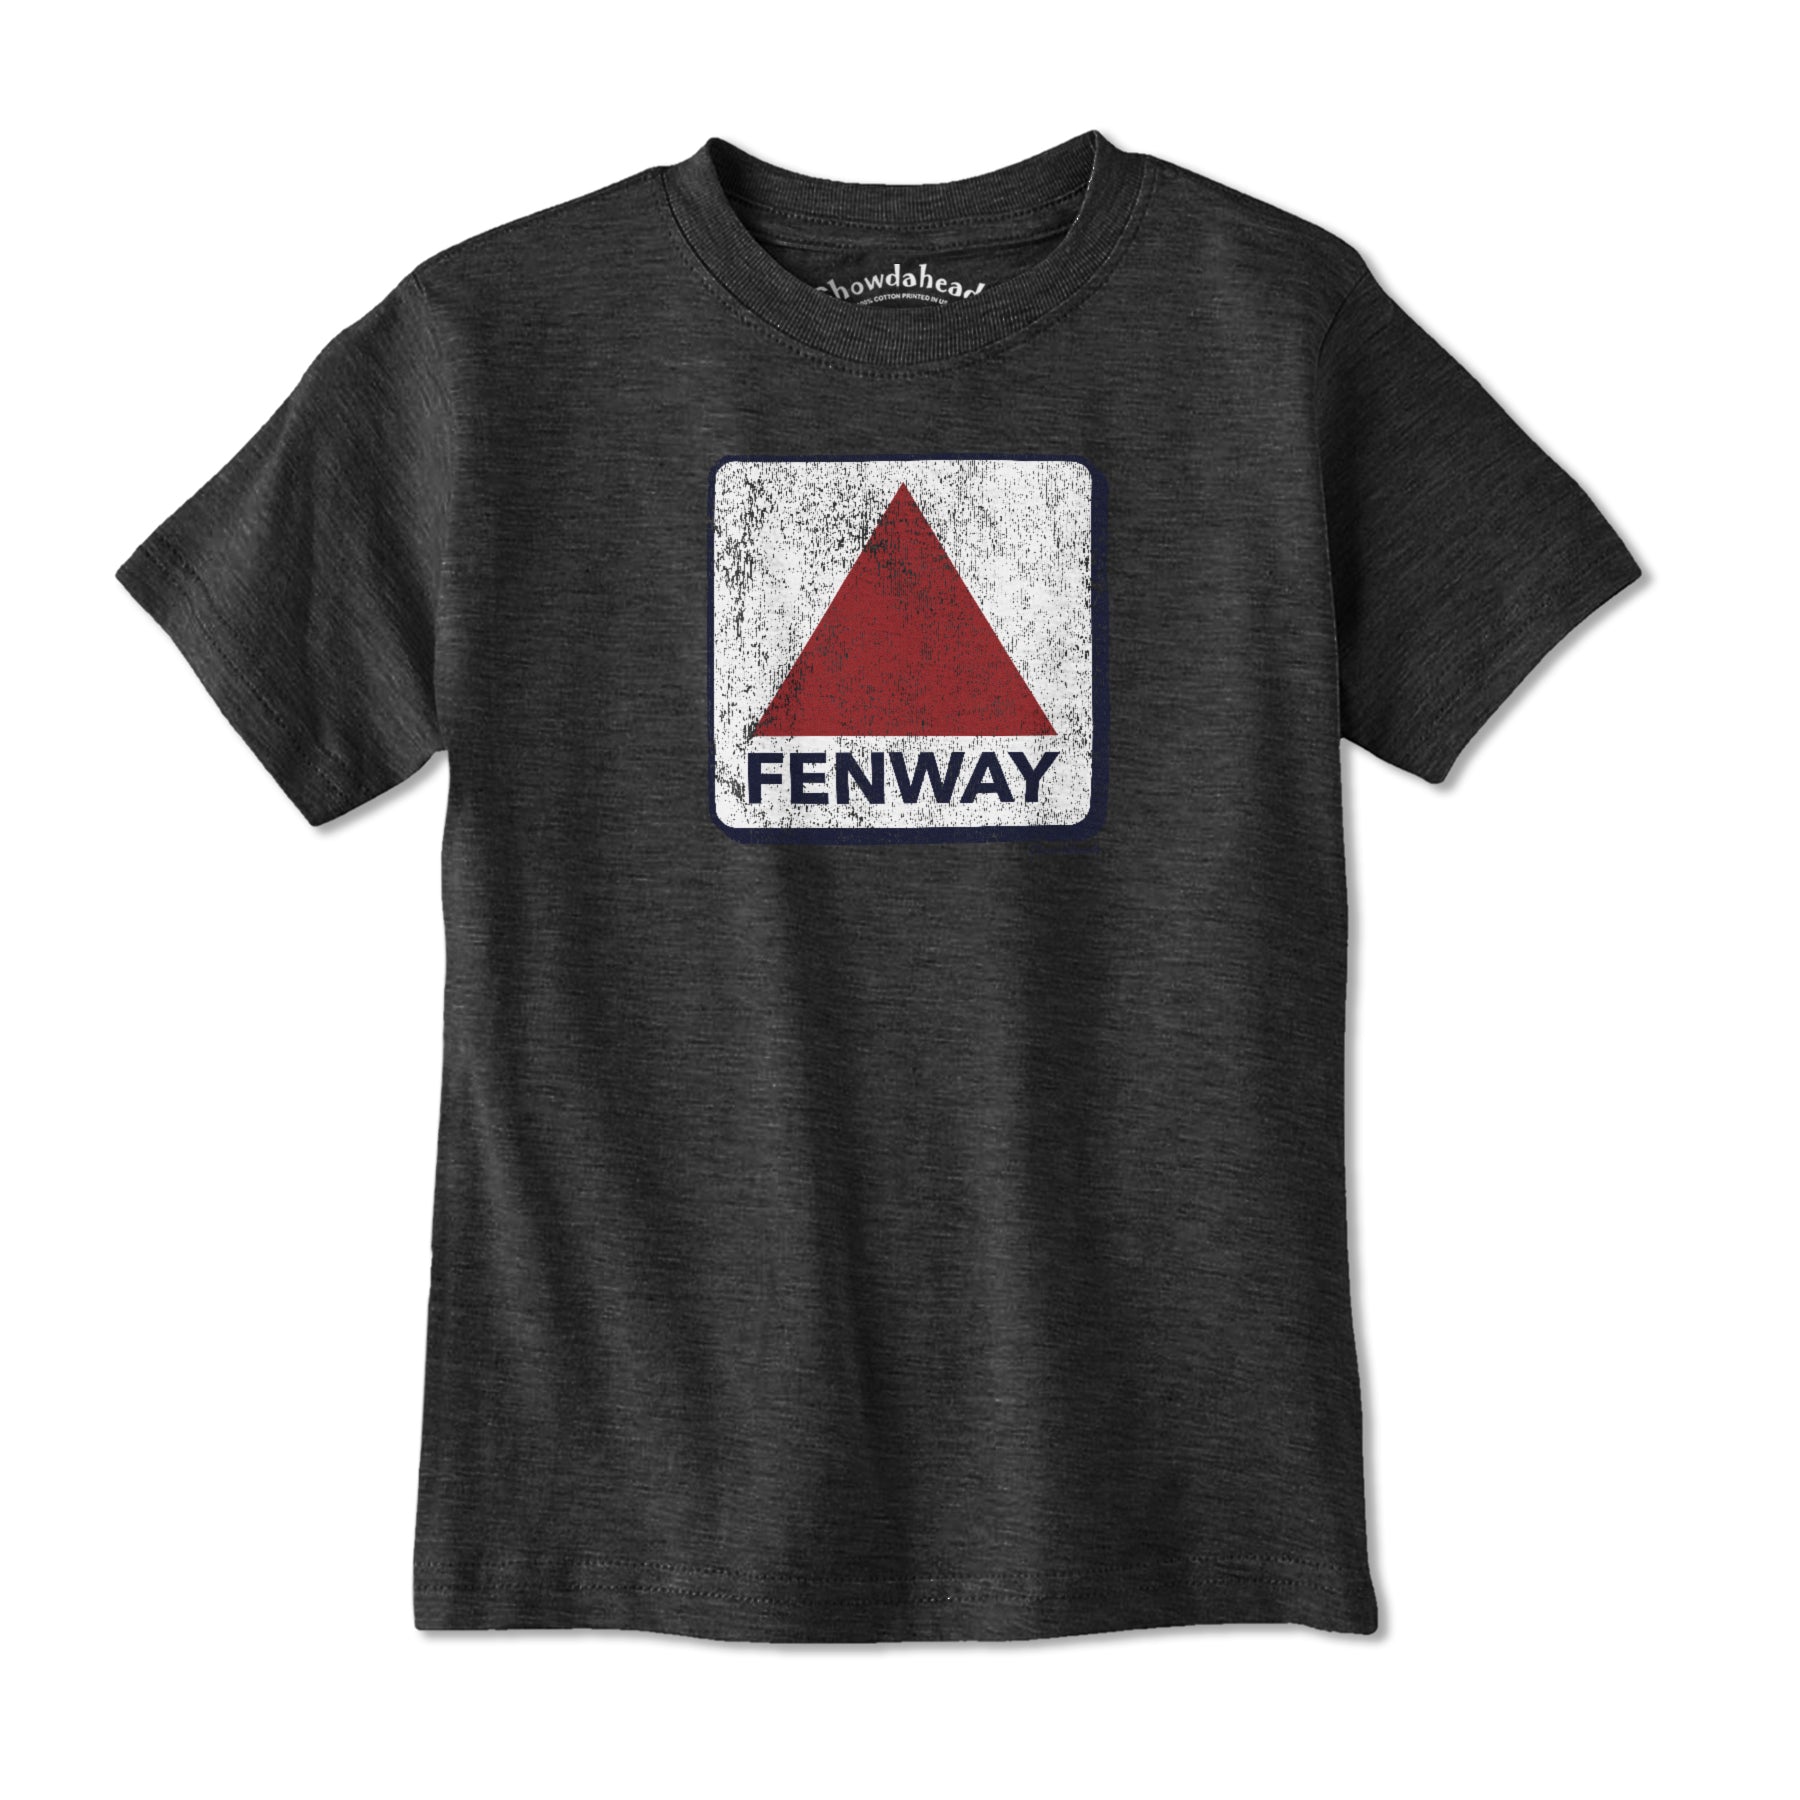 Fenway Sign Youth T-Shirt - Chowdaheadz